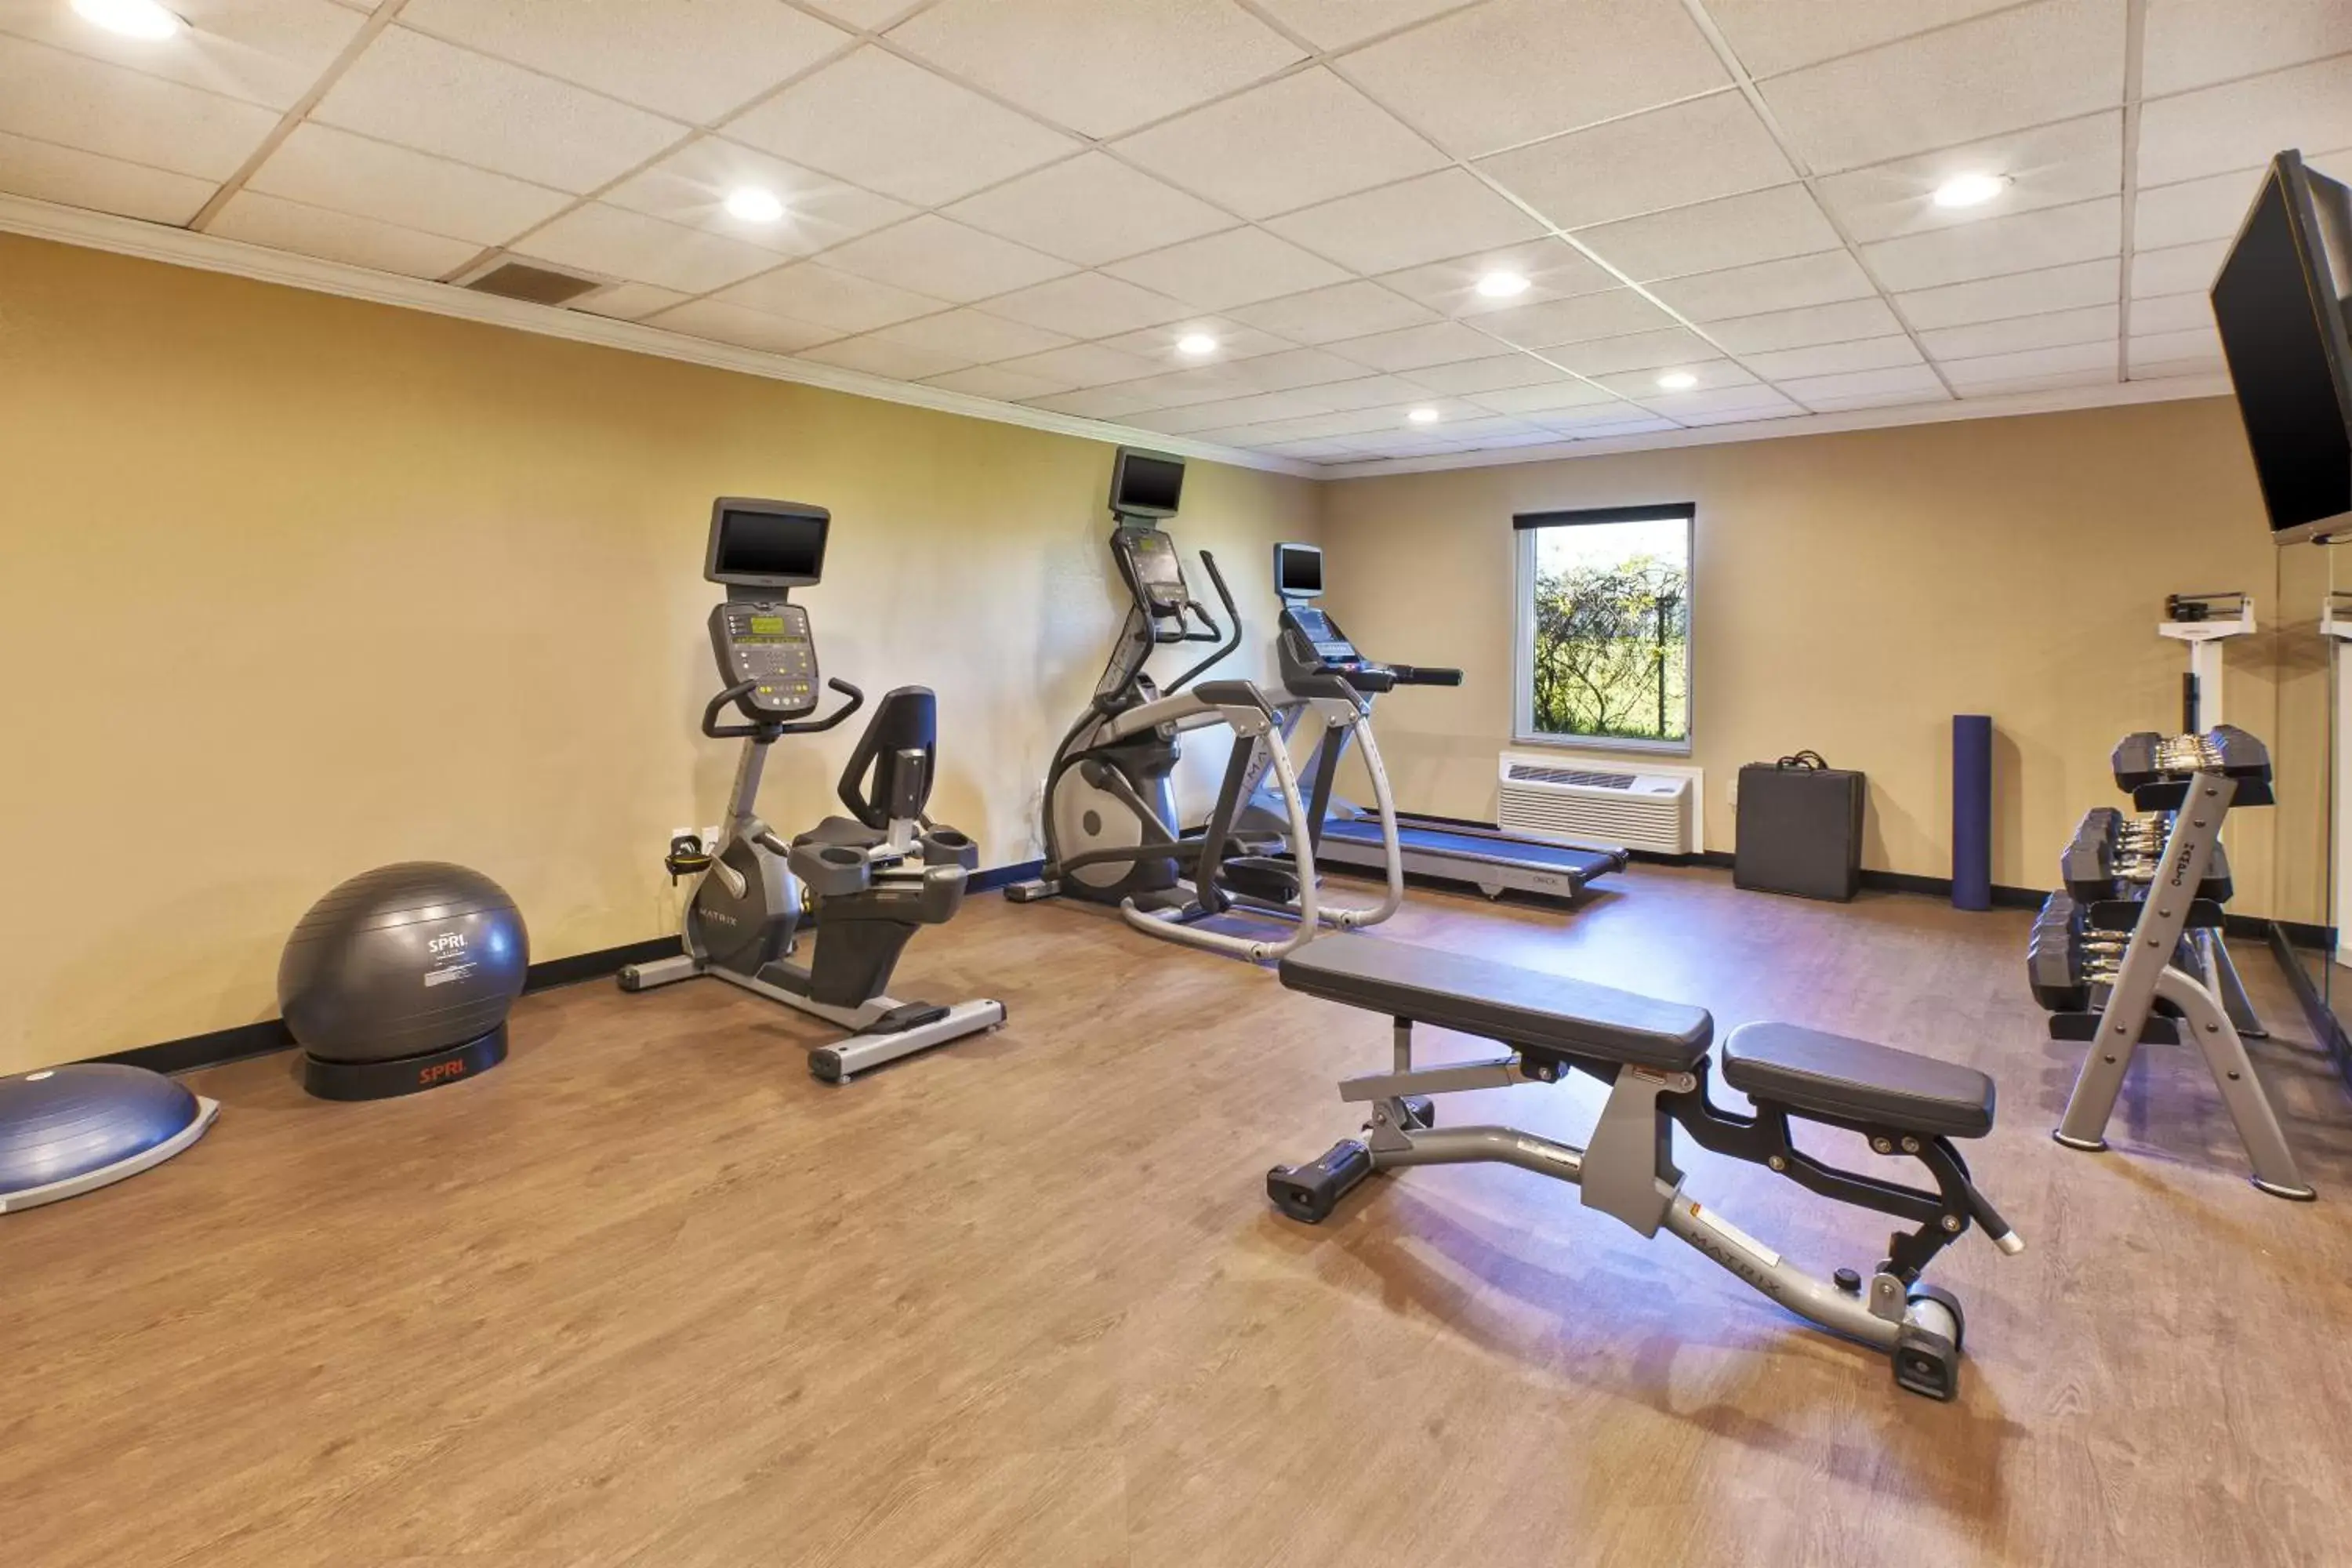 Fitness centre/facilities, Fitness Center/Facilities in Country Inn & Suites by Radisson Benton Harbor-St Joseph MI